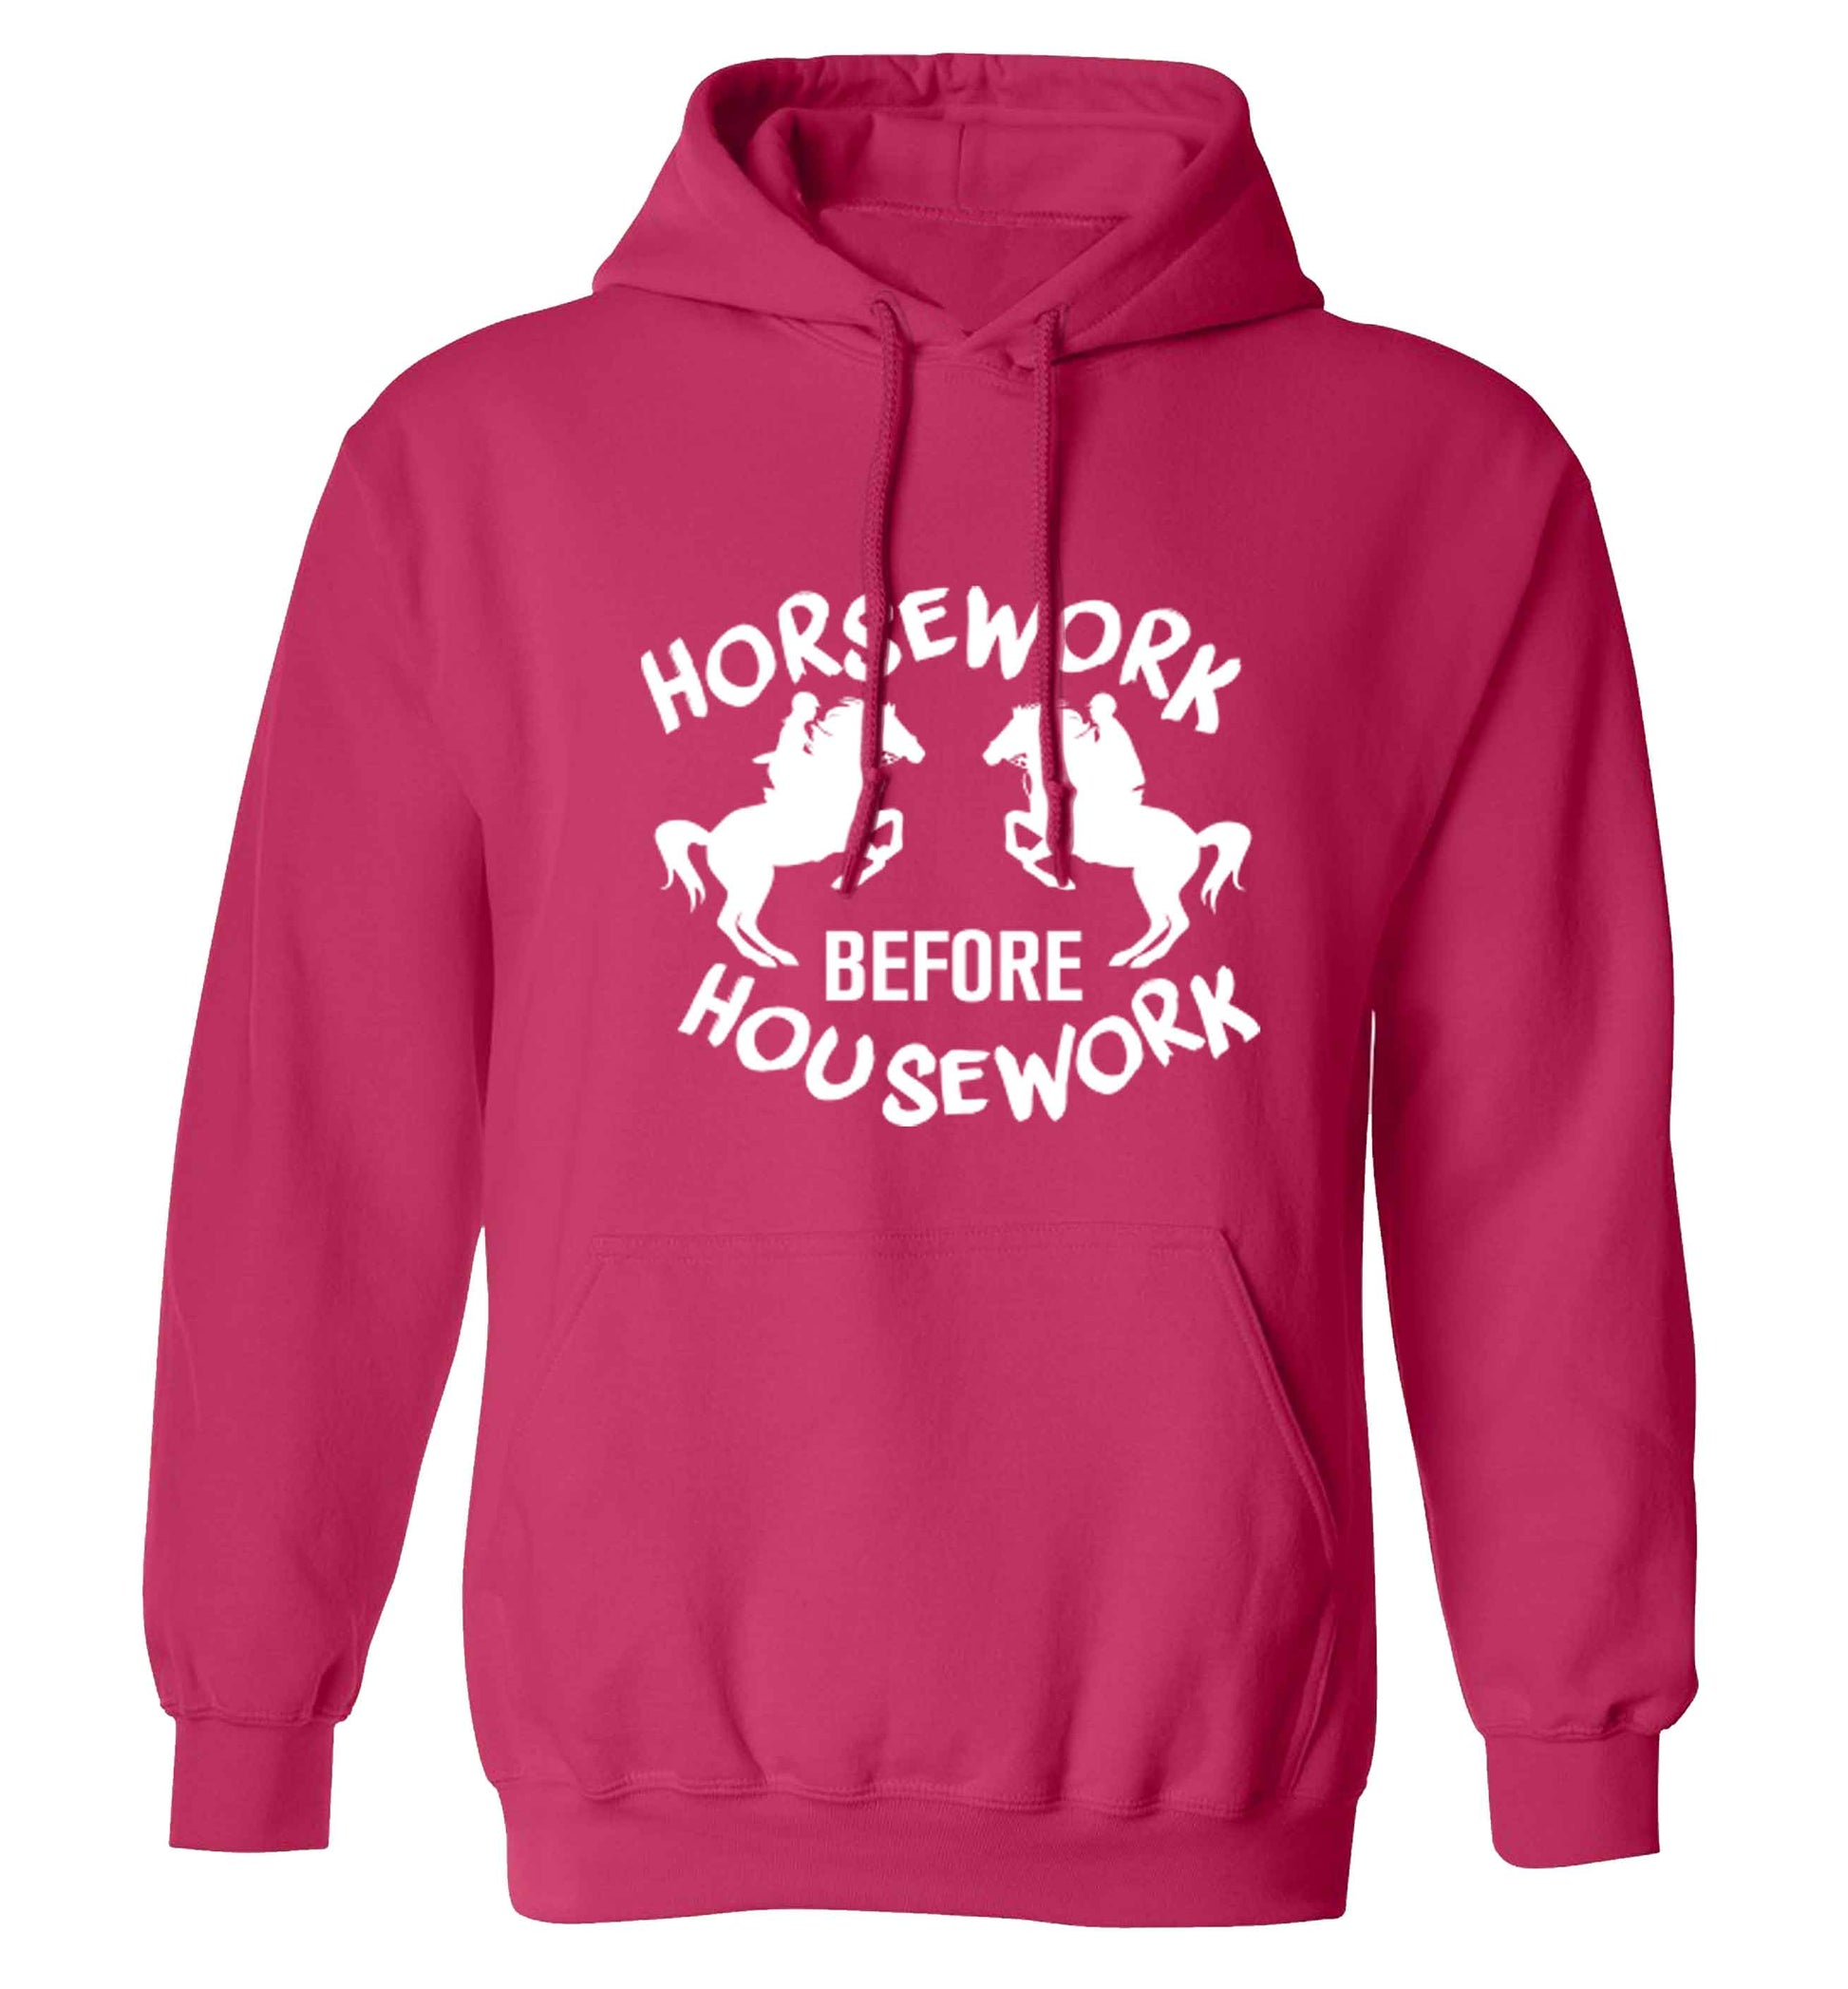 Horsework before housework adults unisex pink hoodie 2XL